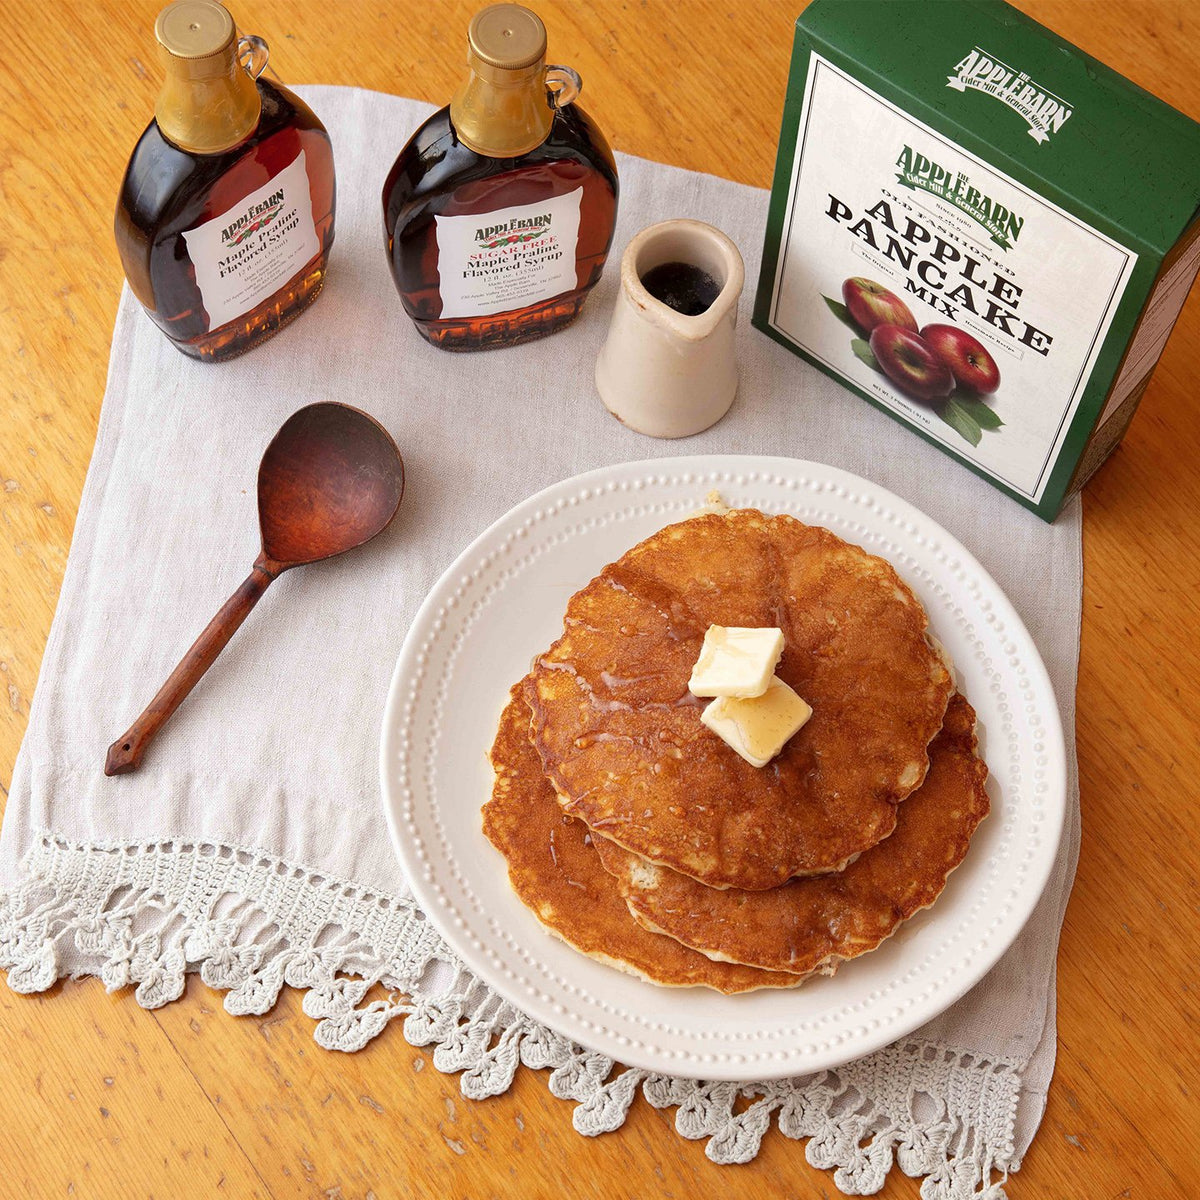 Sugar free maple praline flavored syrup on apple pancakes